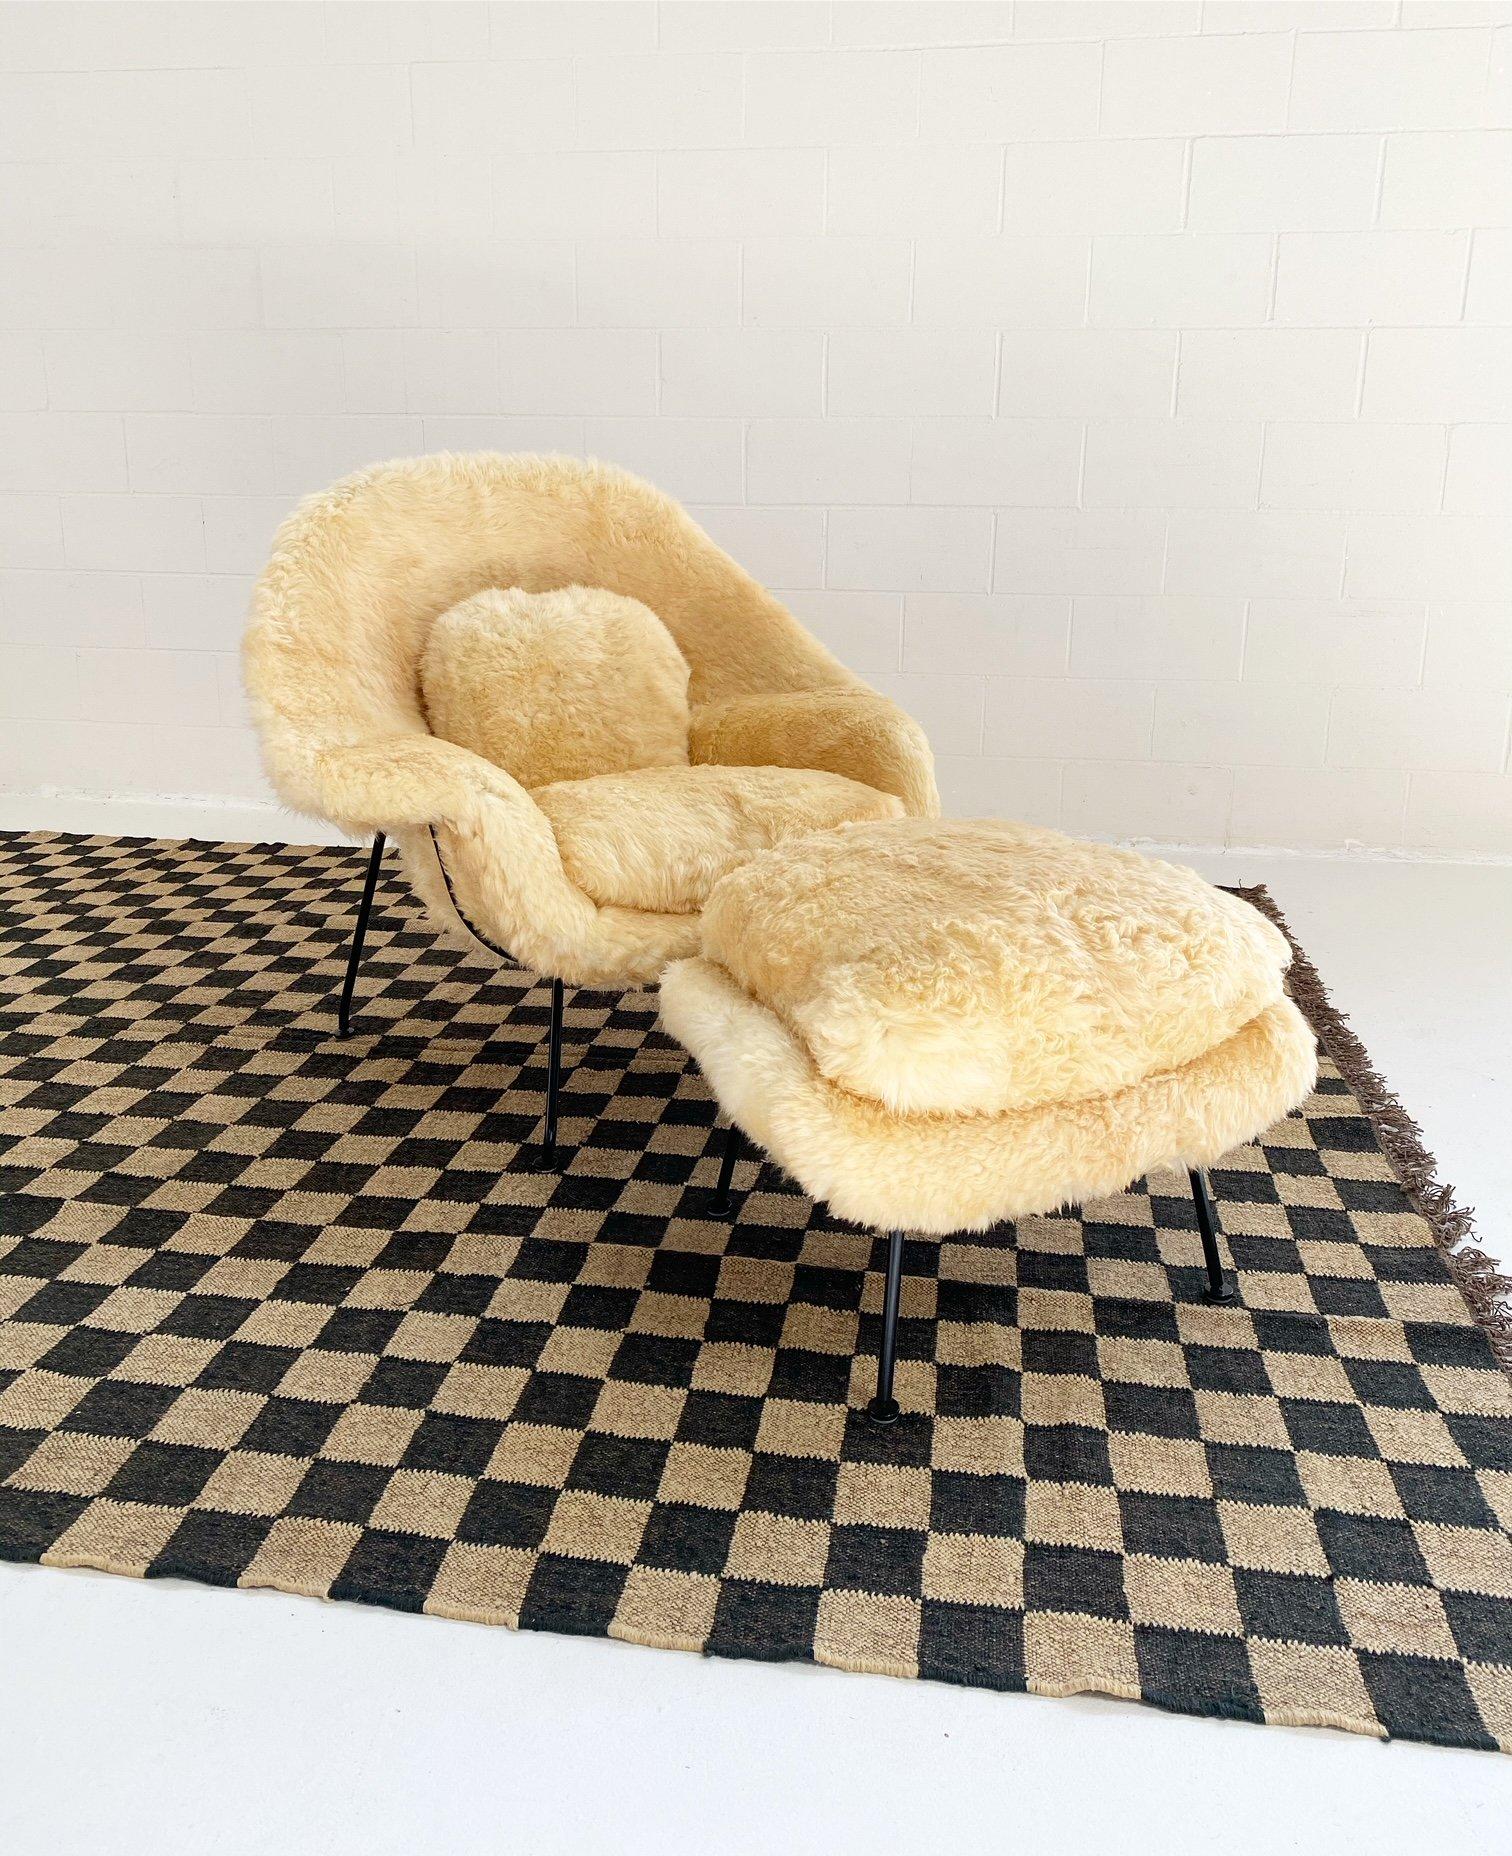 womb chair sheepskin